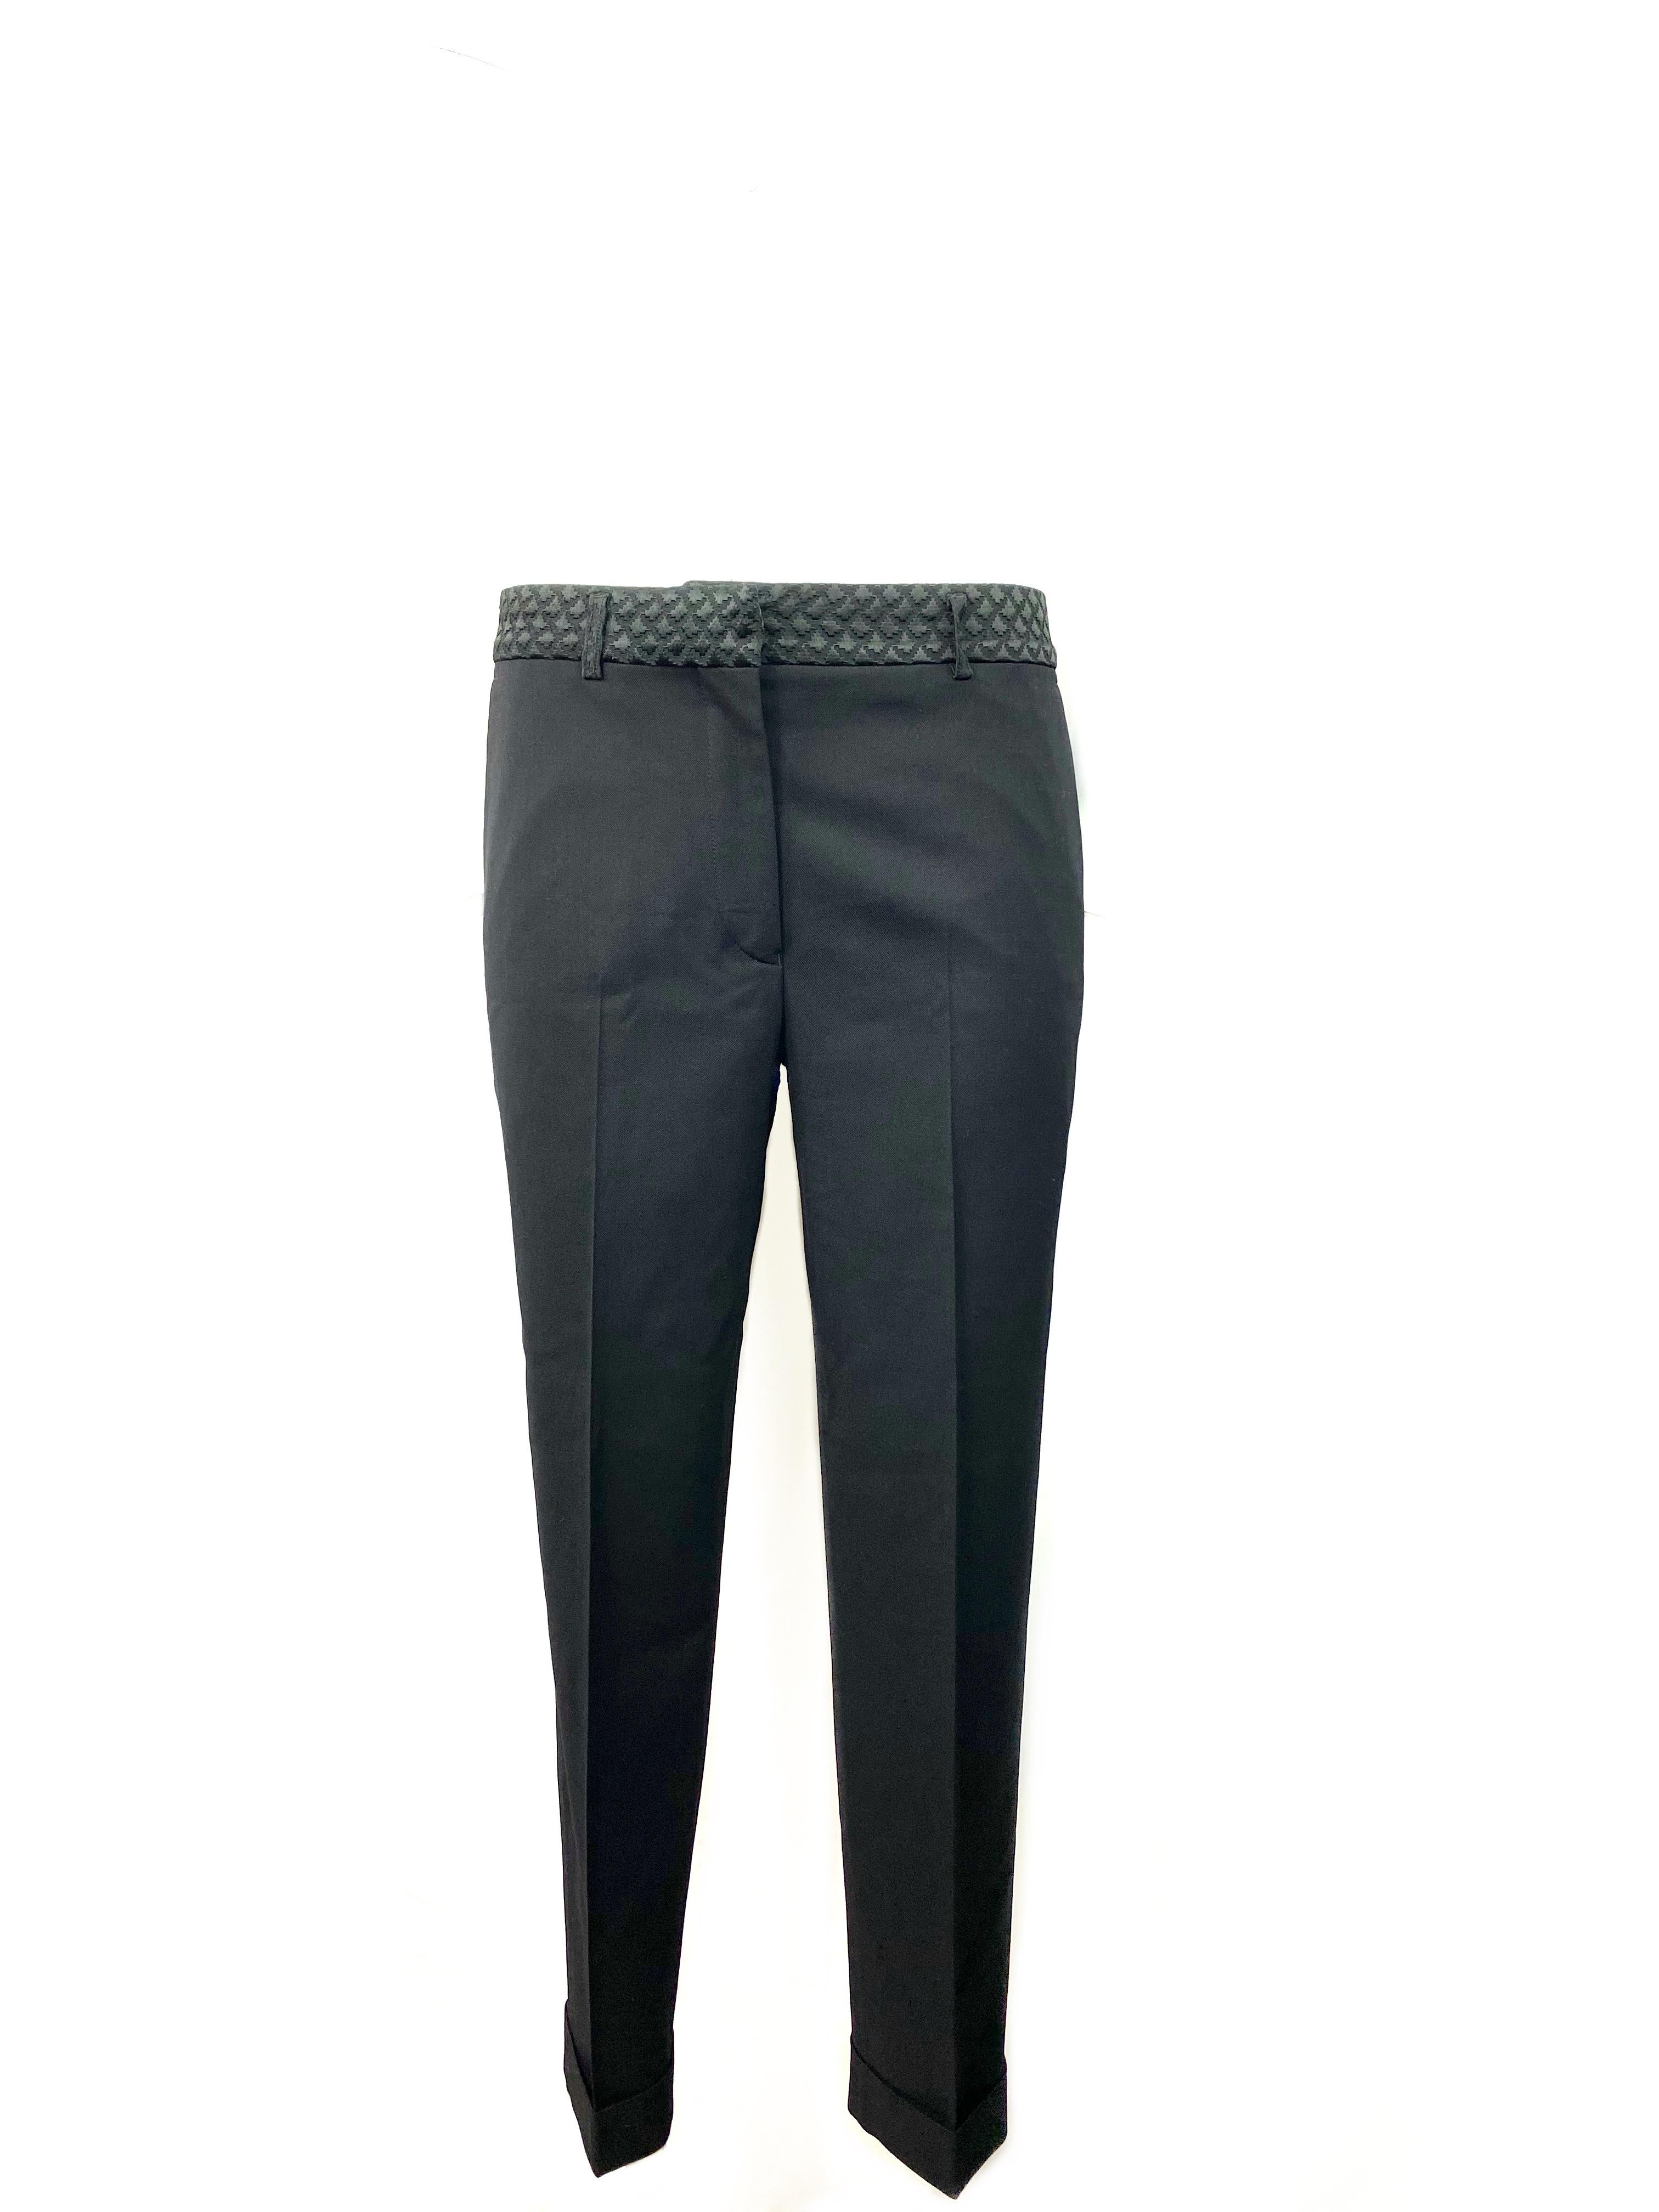 Haider Achermann Black Silk Tuxedo Blazer and Wool Pants Suit Set  For Sale 5